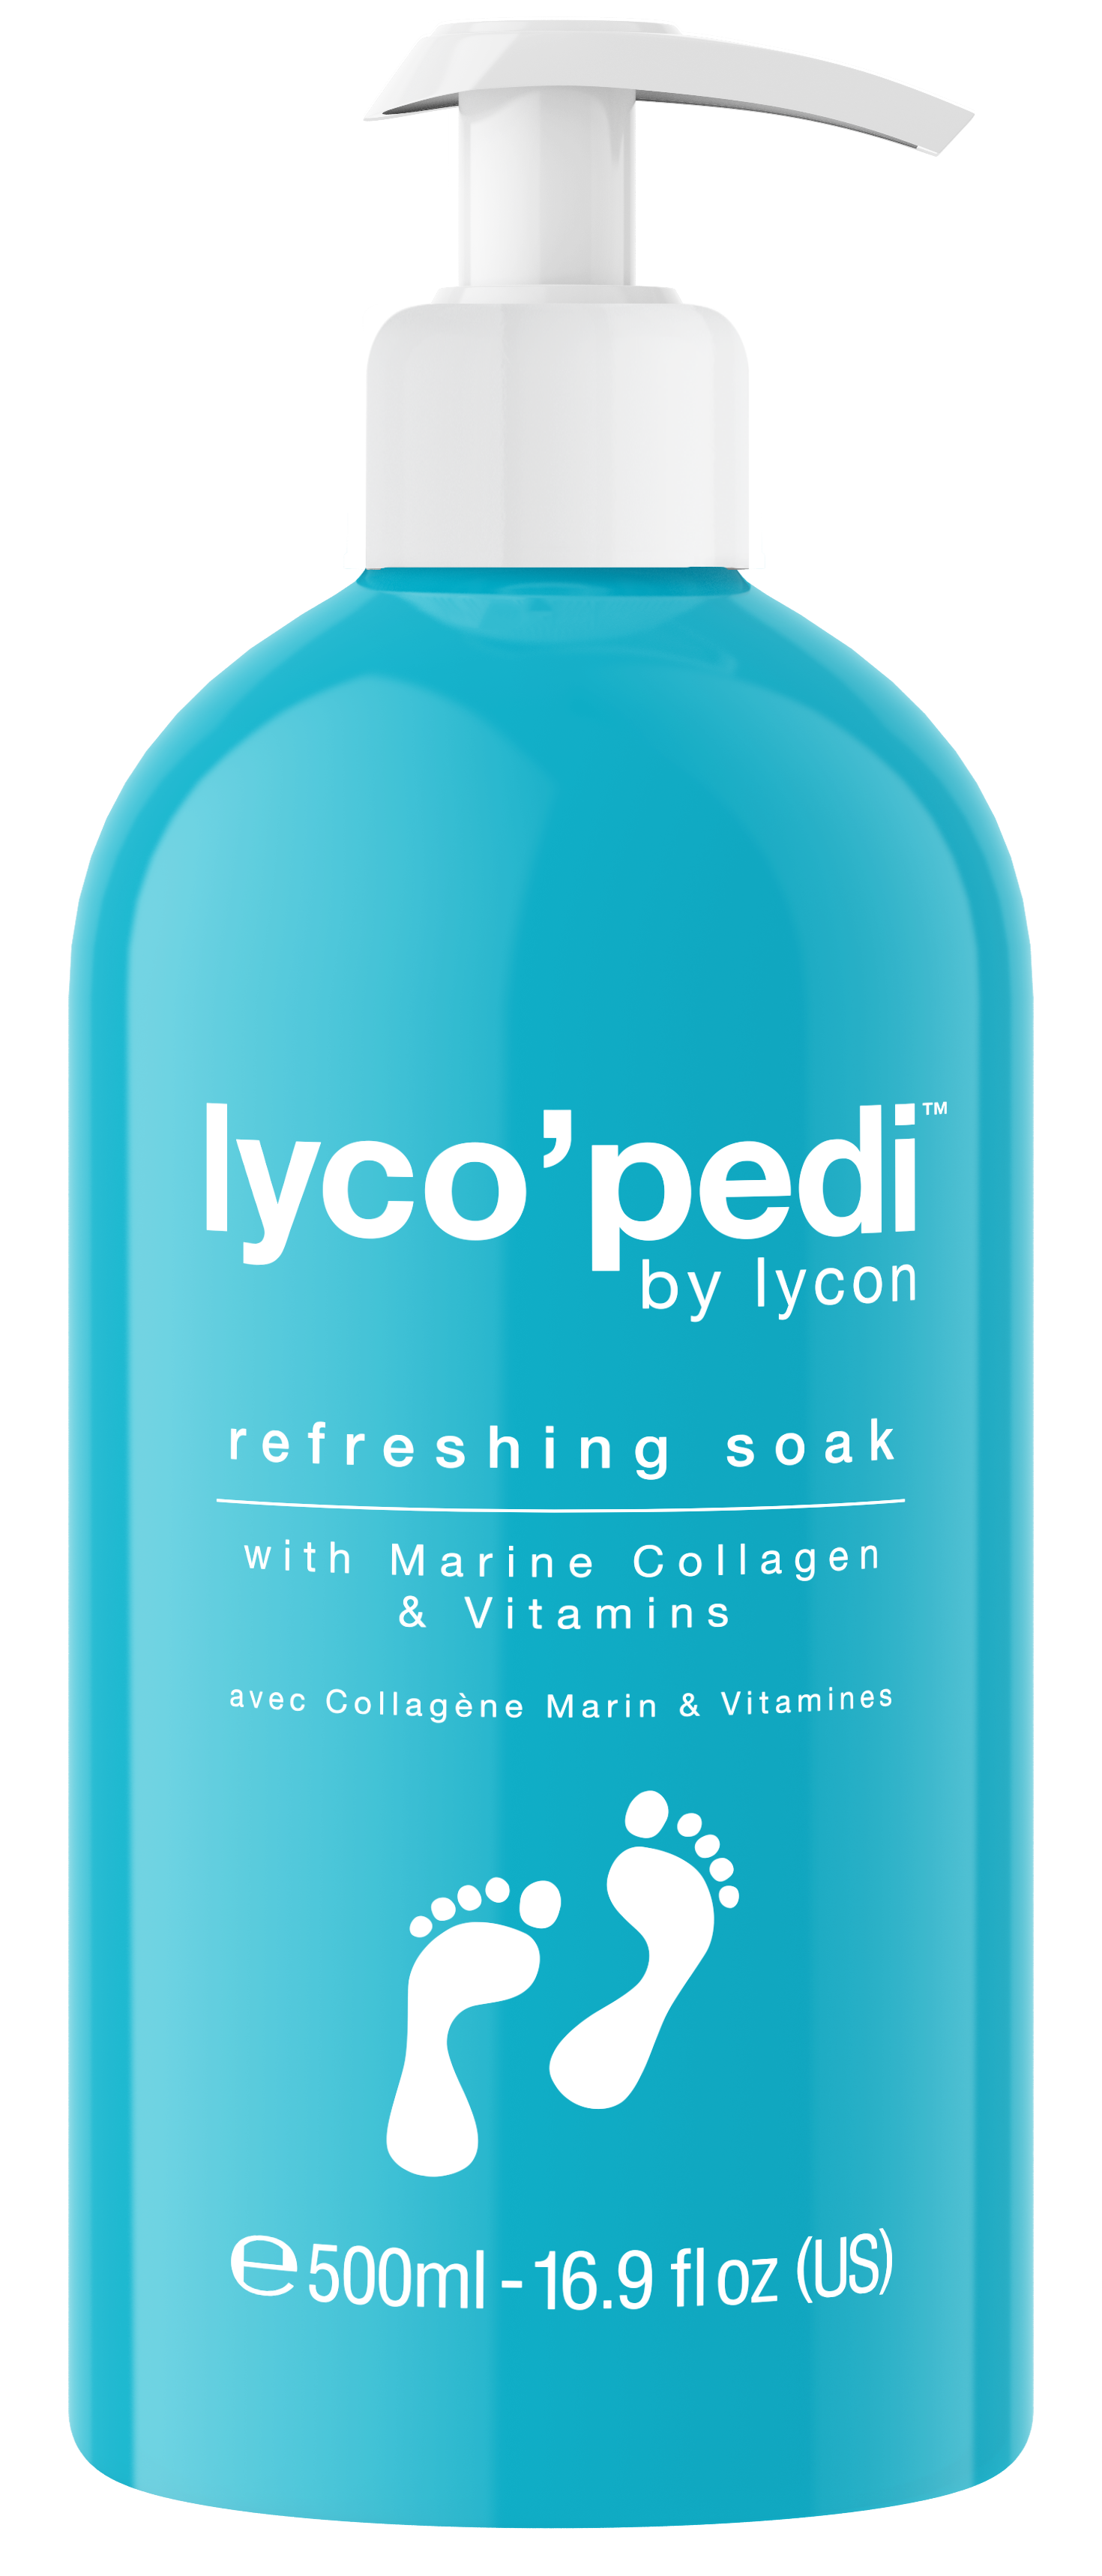 Lyco'pedi Refreshing Soak 500ml